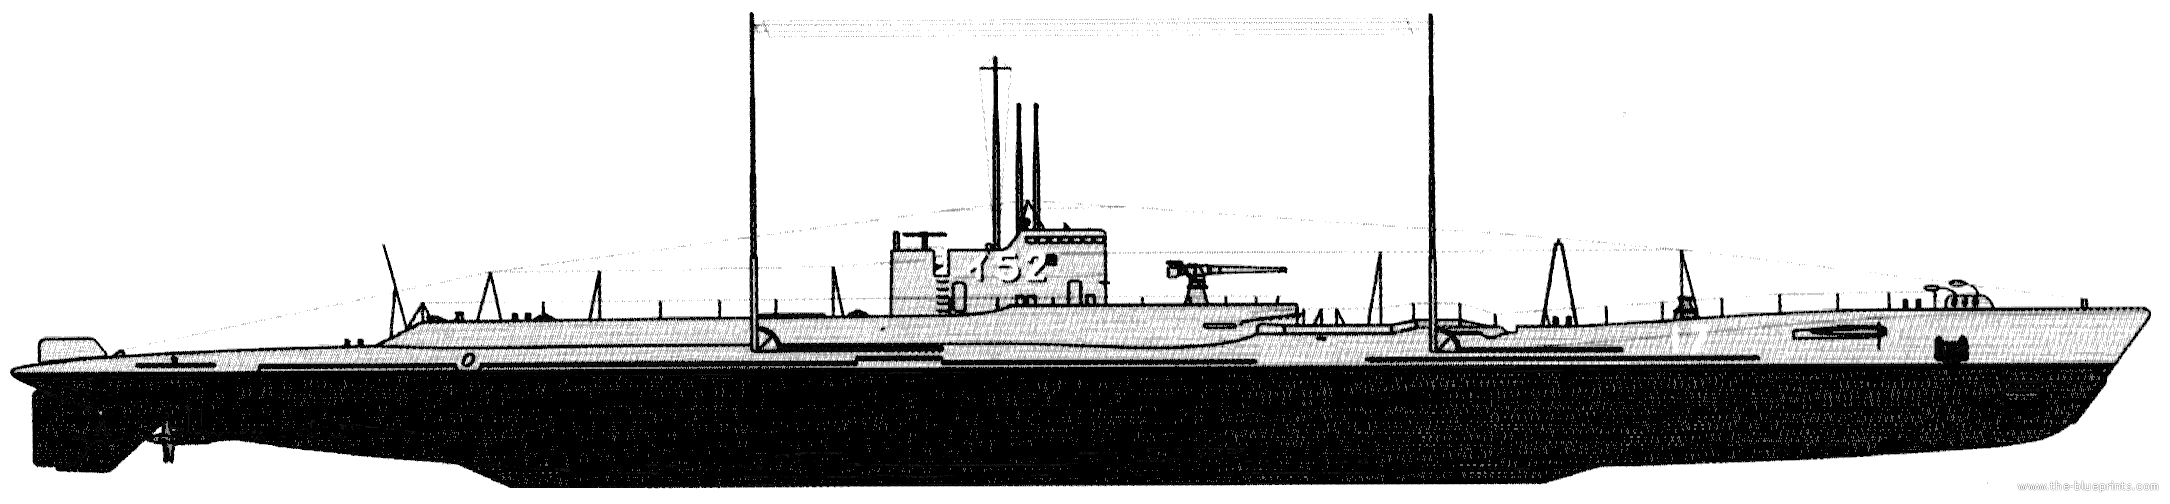 ijn-i-52-submarine.png